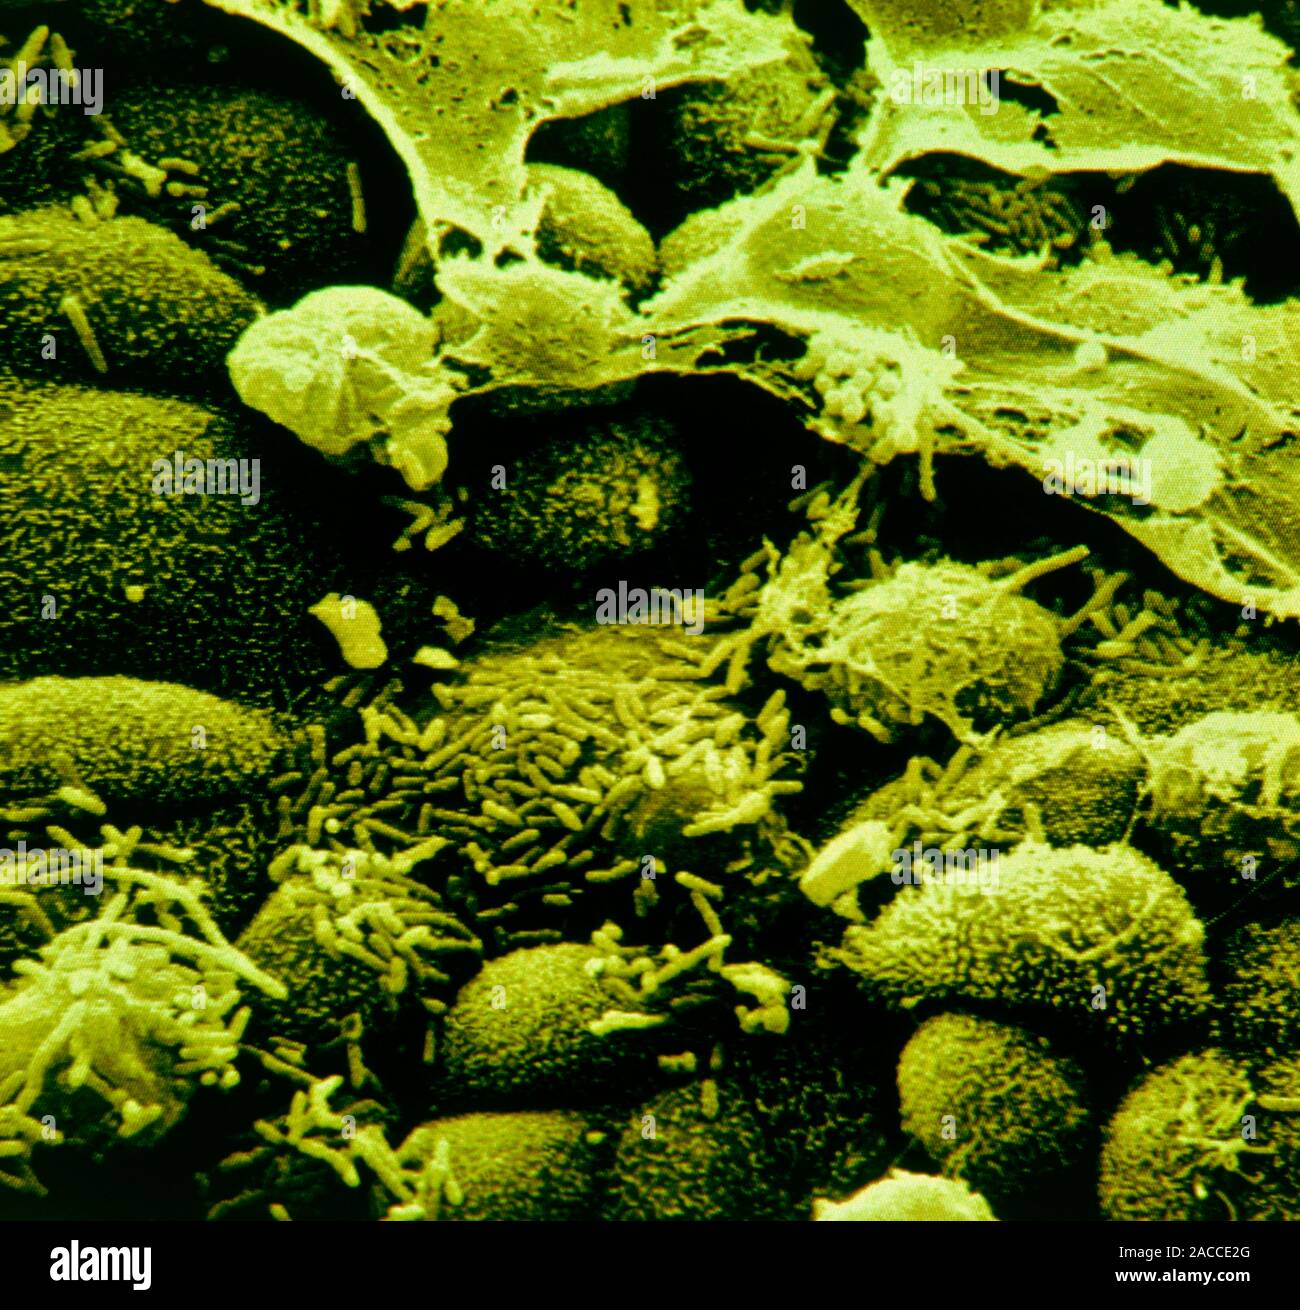 Haemophilus influenzae. Coloured scanning electron micrograph showing ...